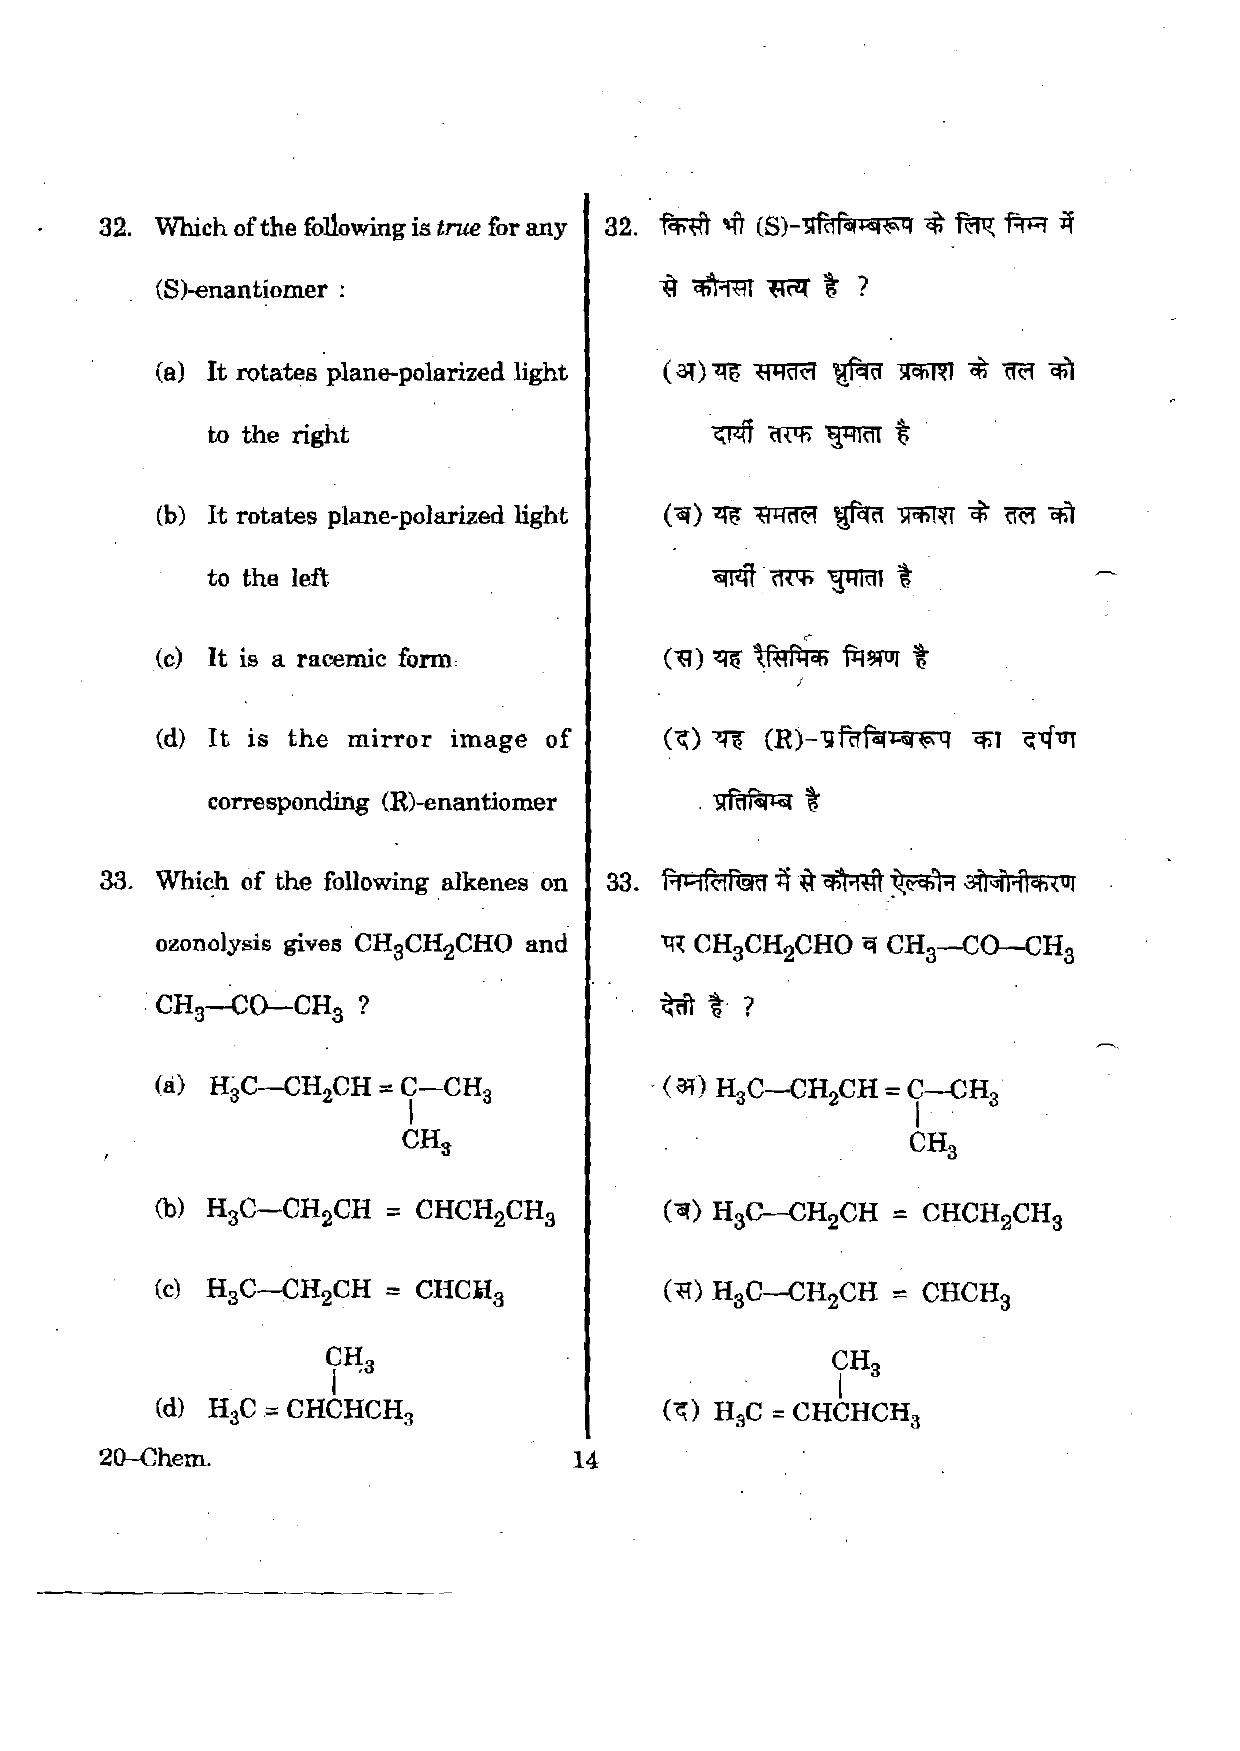 URATPG Chemistry 2012 Question Paper - Page 14